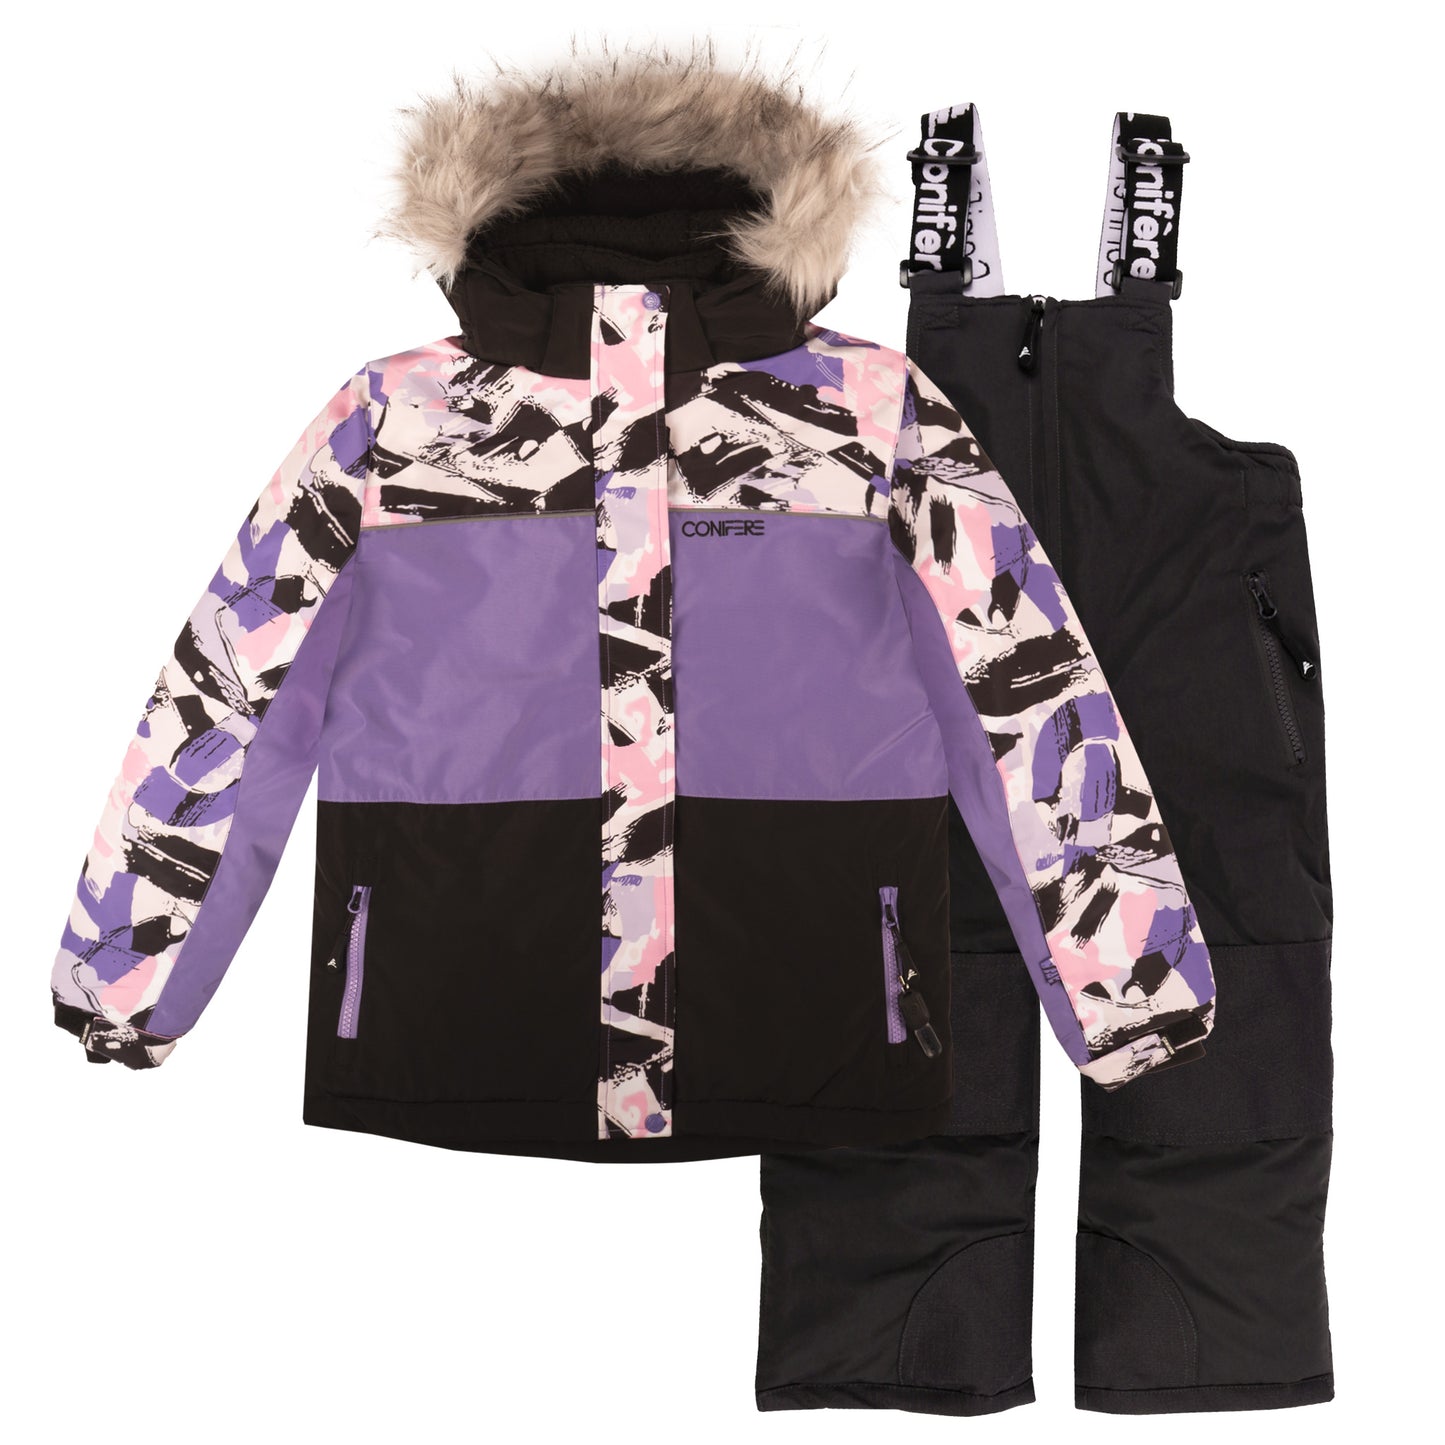 NEBLINA Toddler Girl's Snowsuit Set